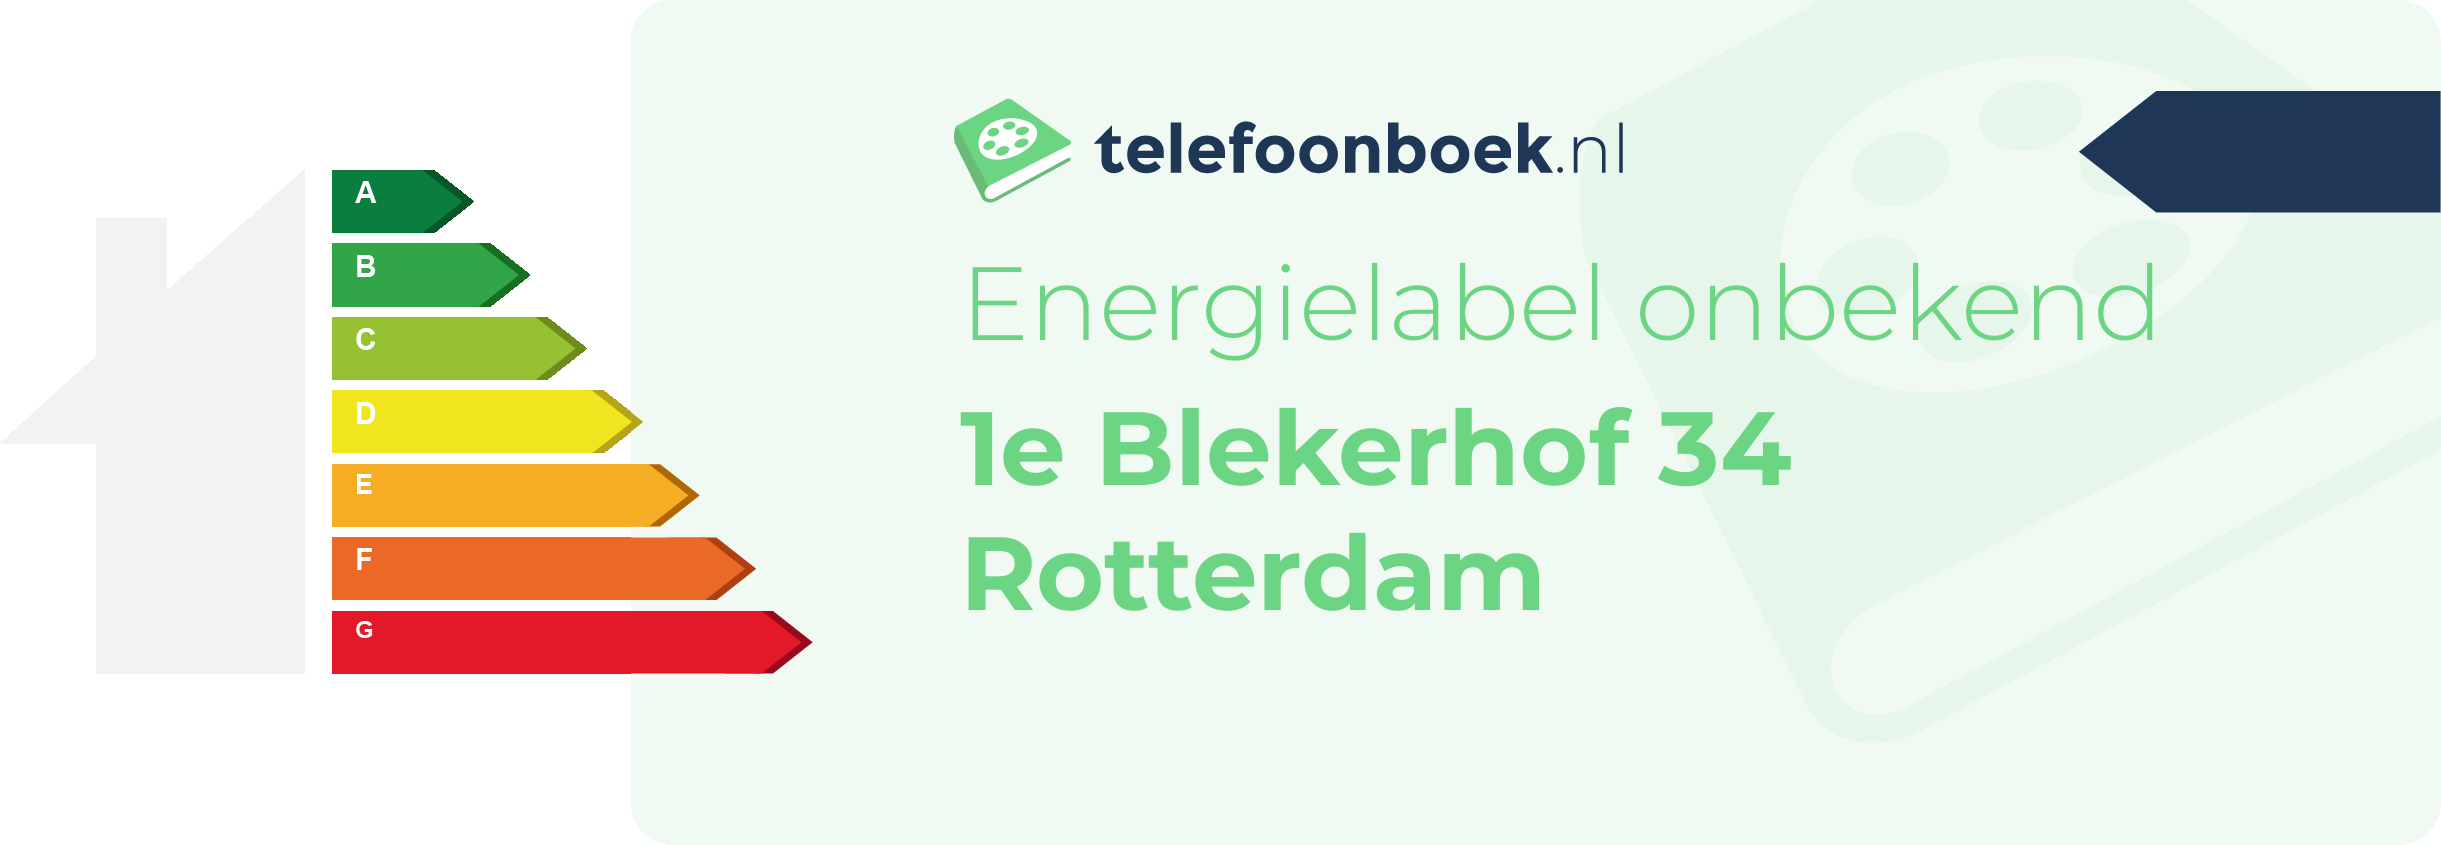 Energielabel 1e Blekerhof 34 Rotterdam